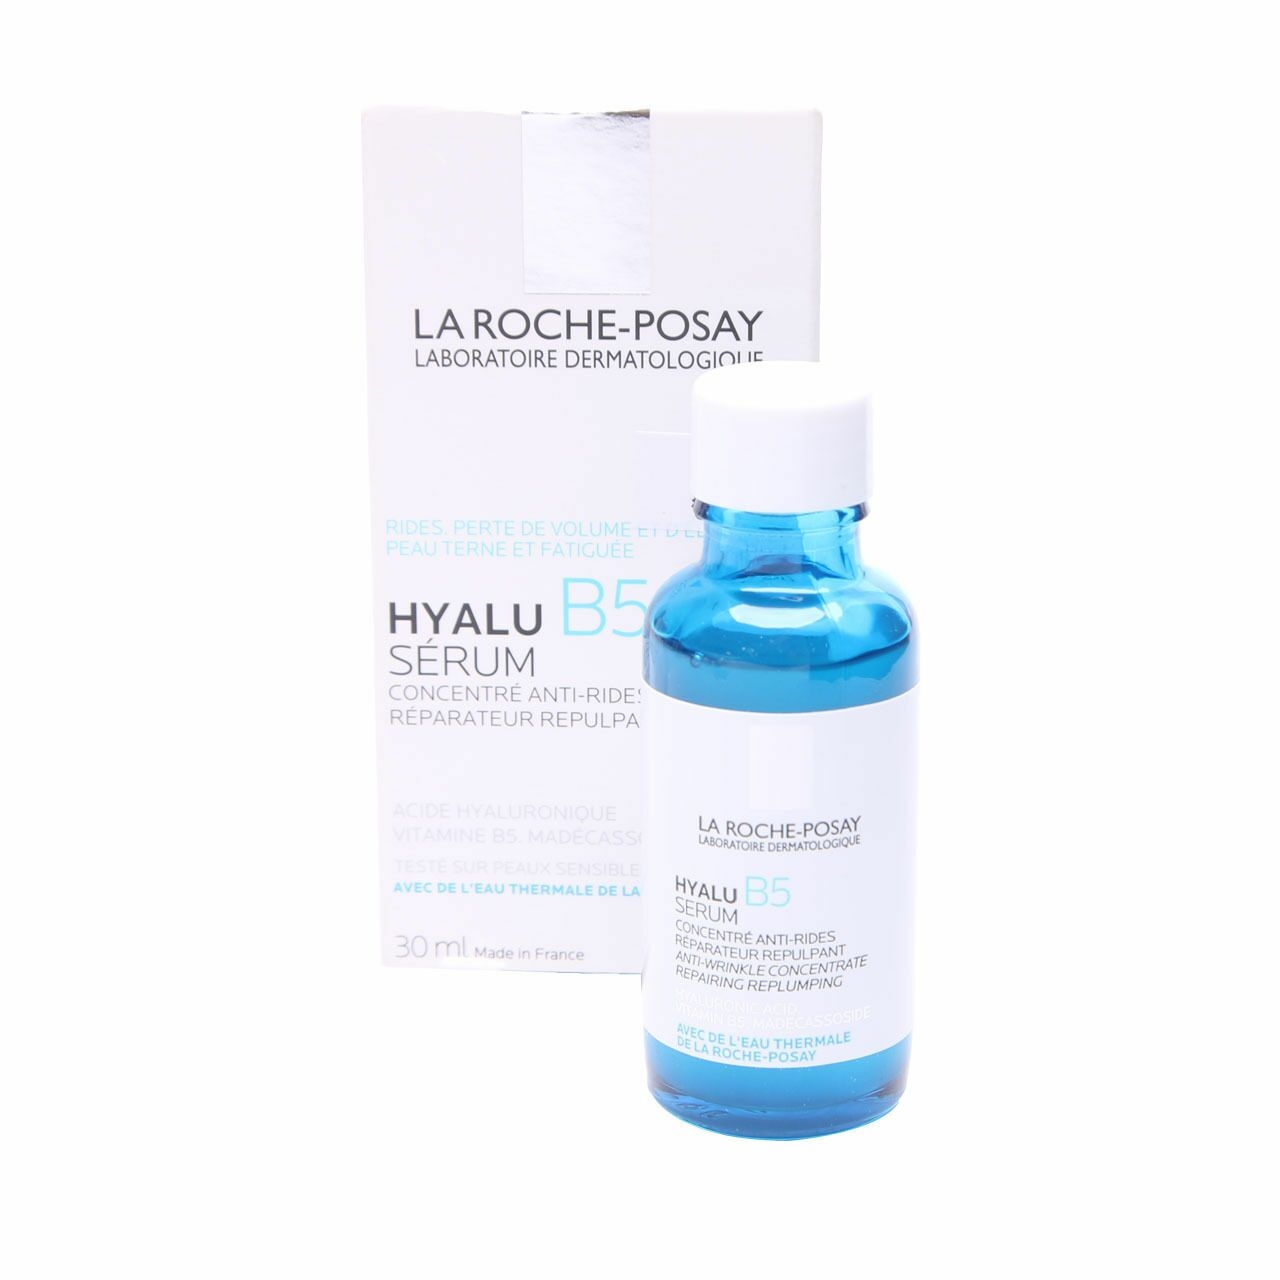 La Roche Posay HYALU B5 SERUM Concentre Anti - Rides Reparateur Repulpant Skin Care